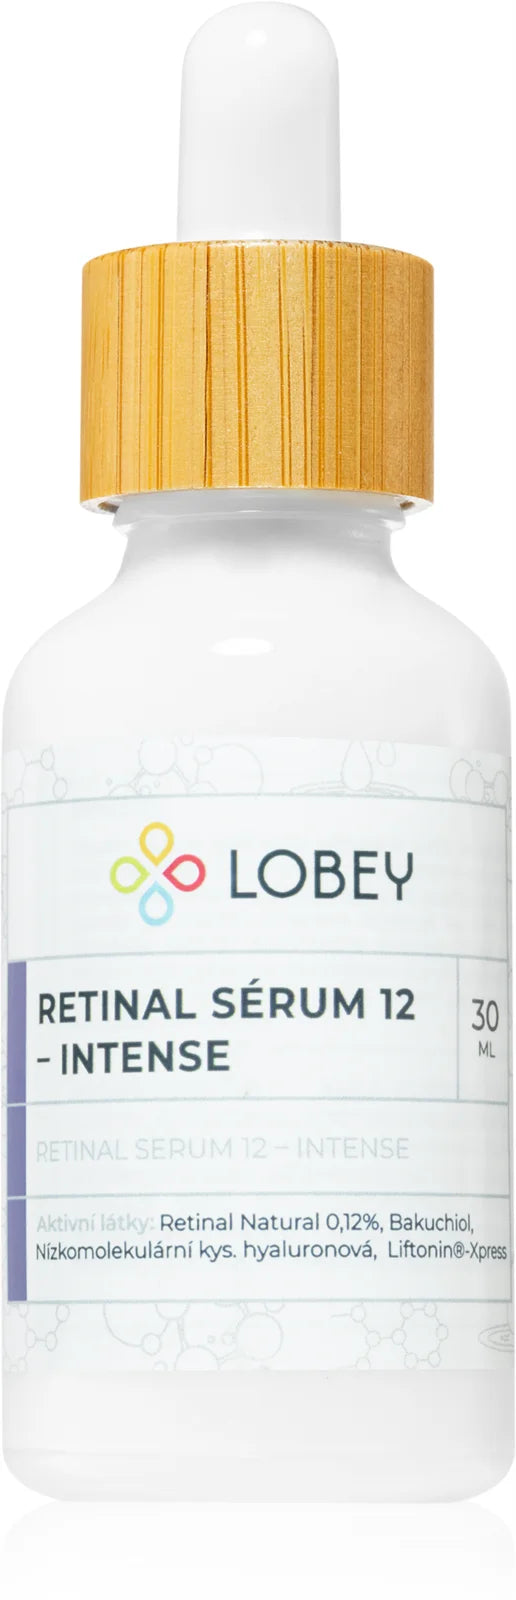 Lobey Intense Retinal Face Serum 12 - 30 ml